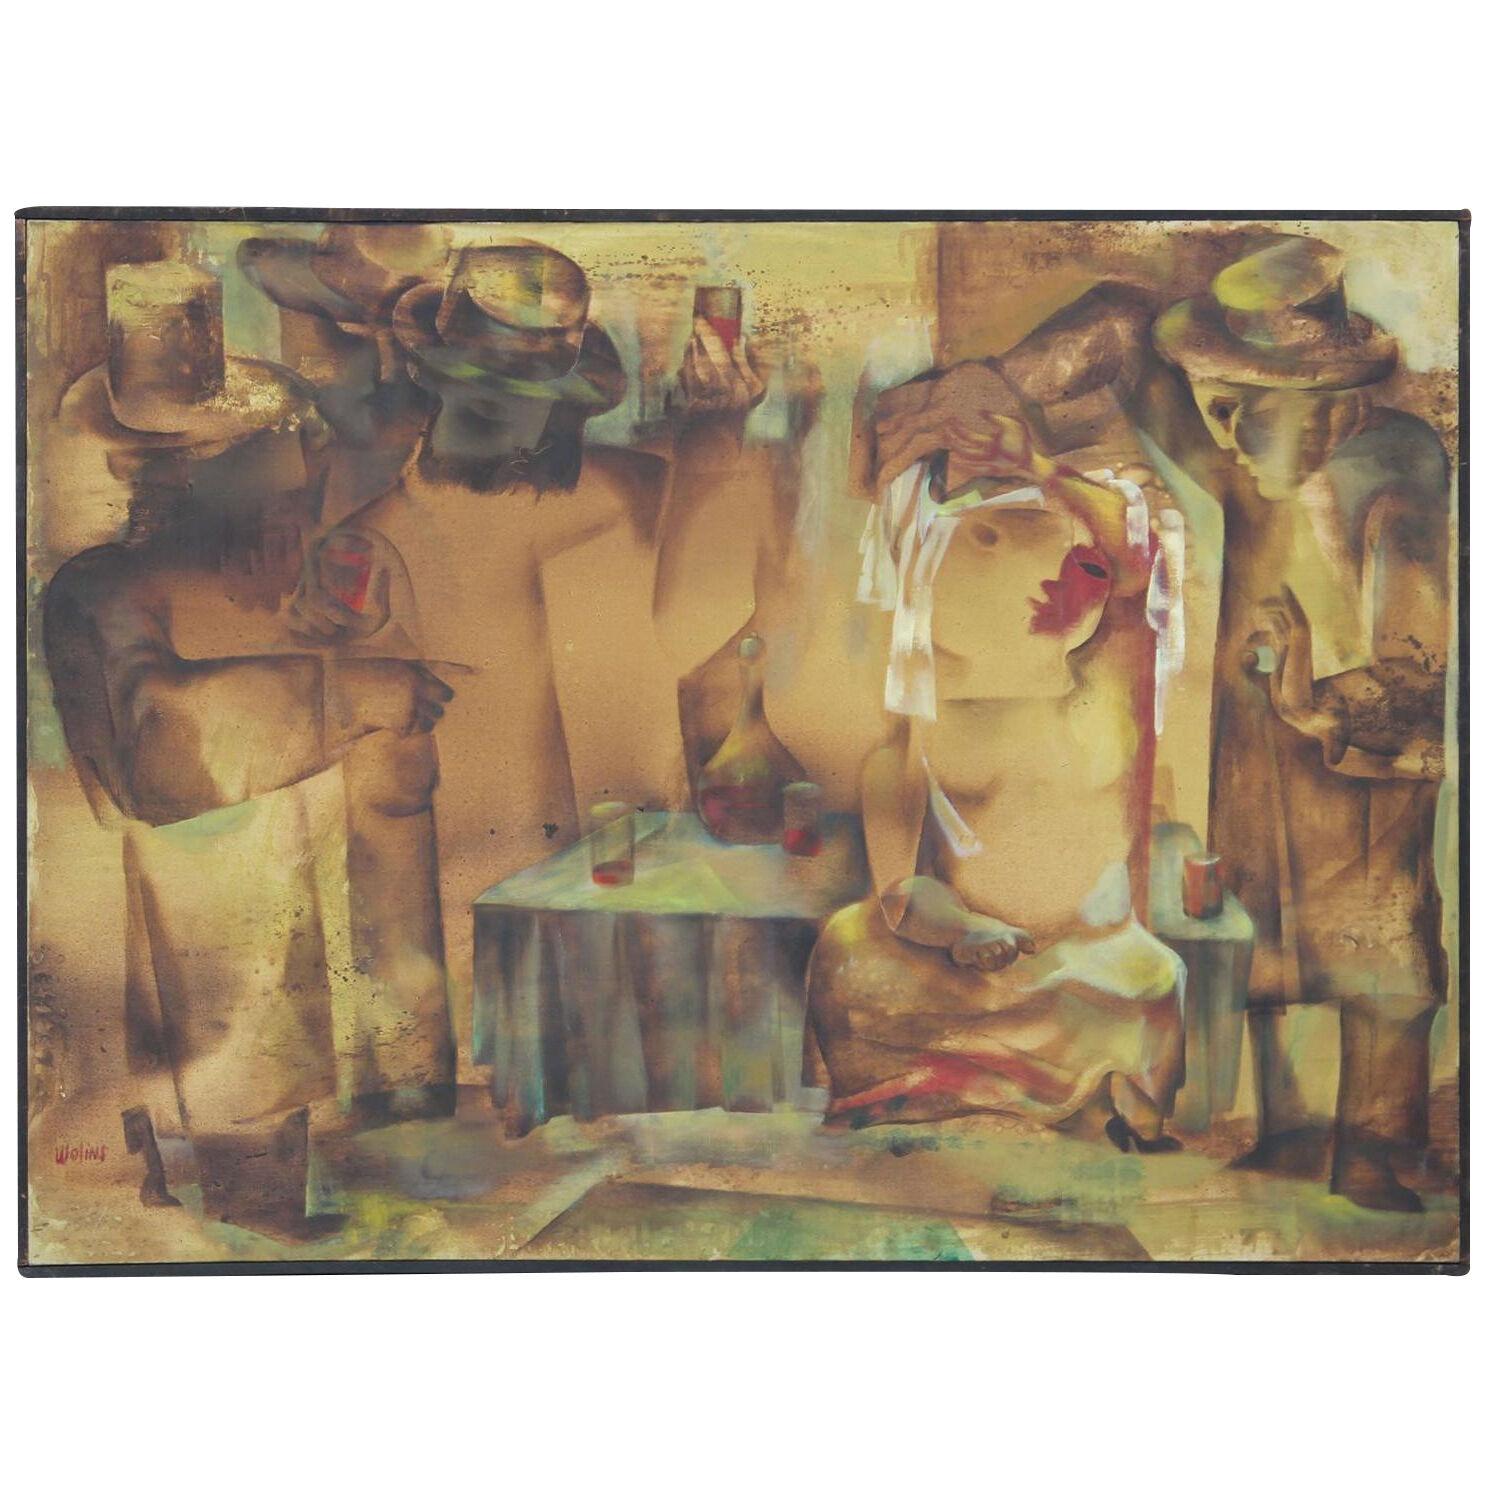 Joseph Wolins "The Bride" Cubist Figurative Painting 20th Century